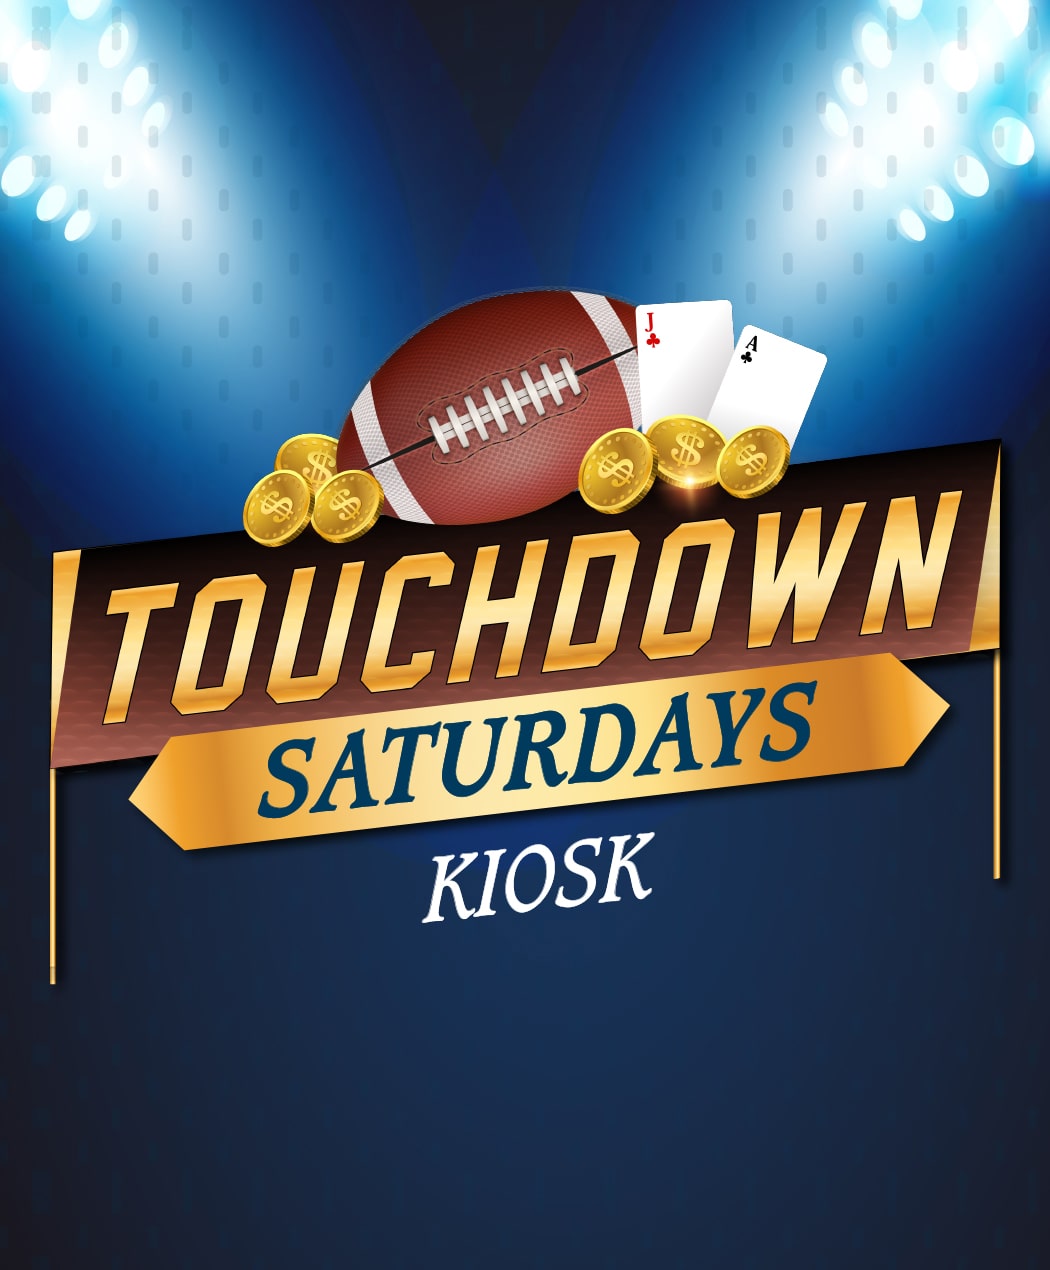 Touchdown Saturdays Kiosk